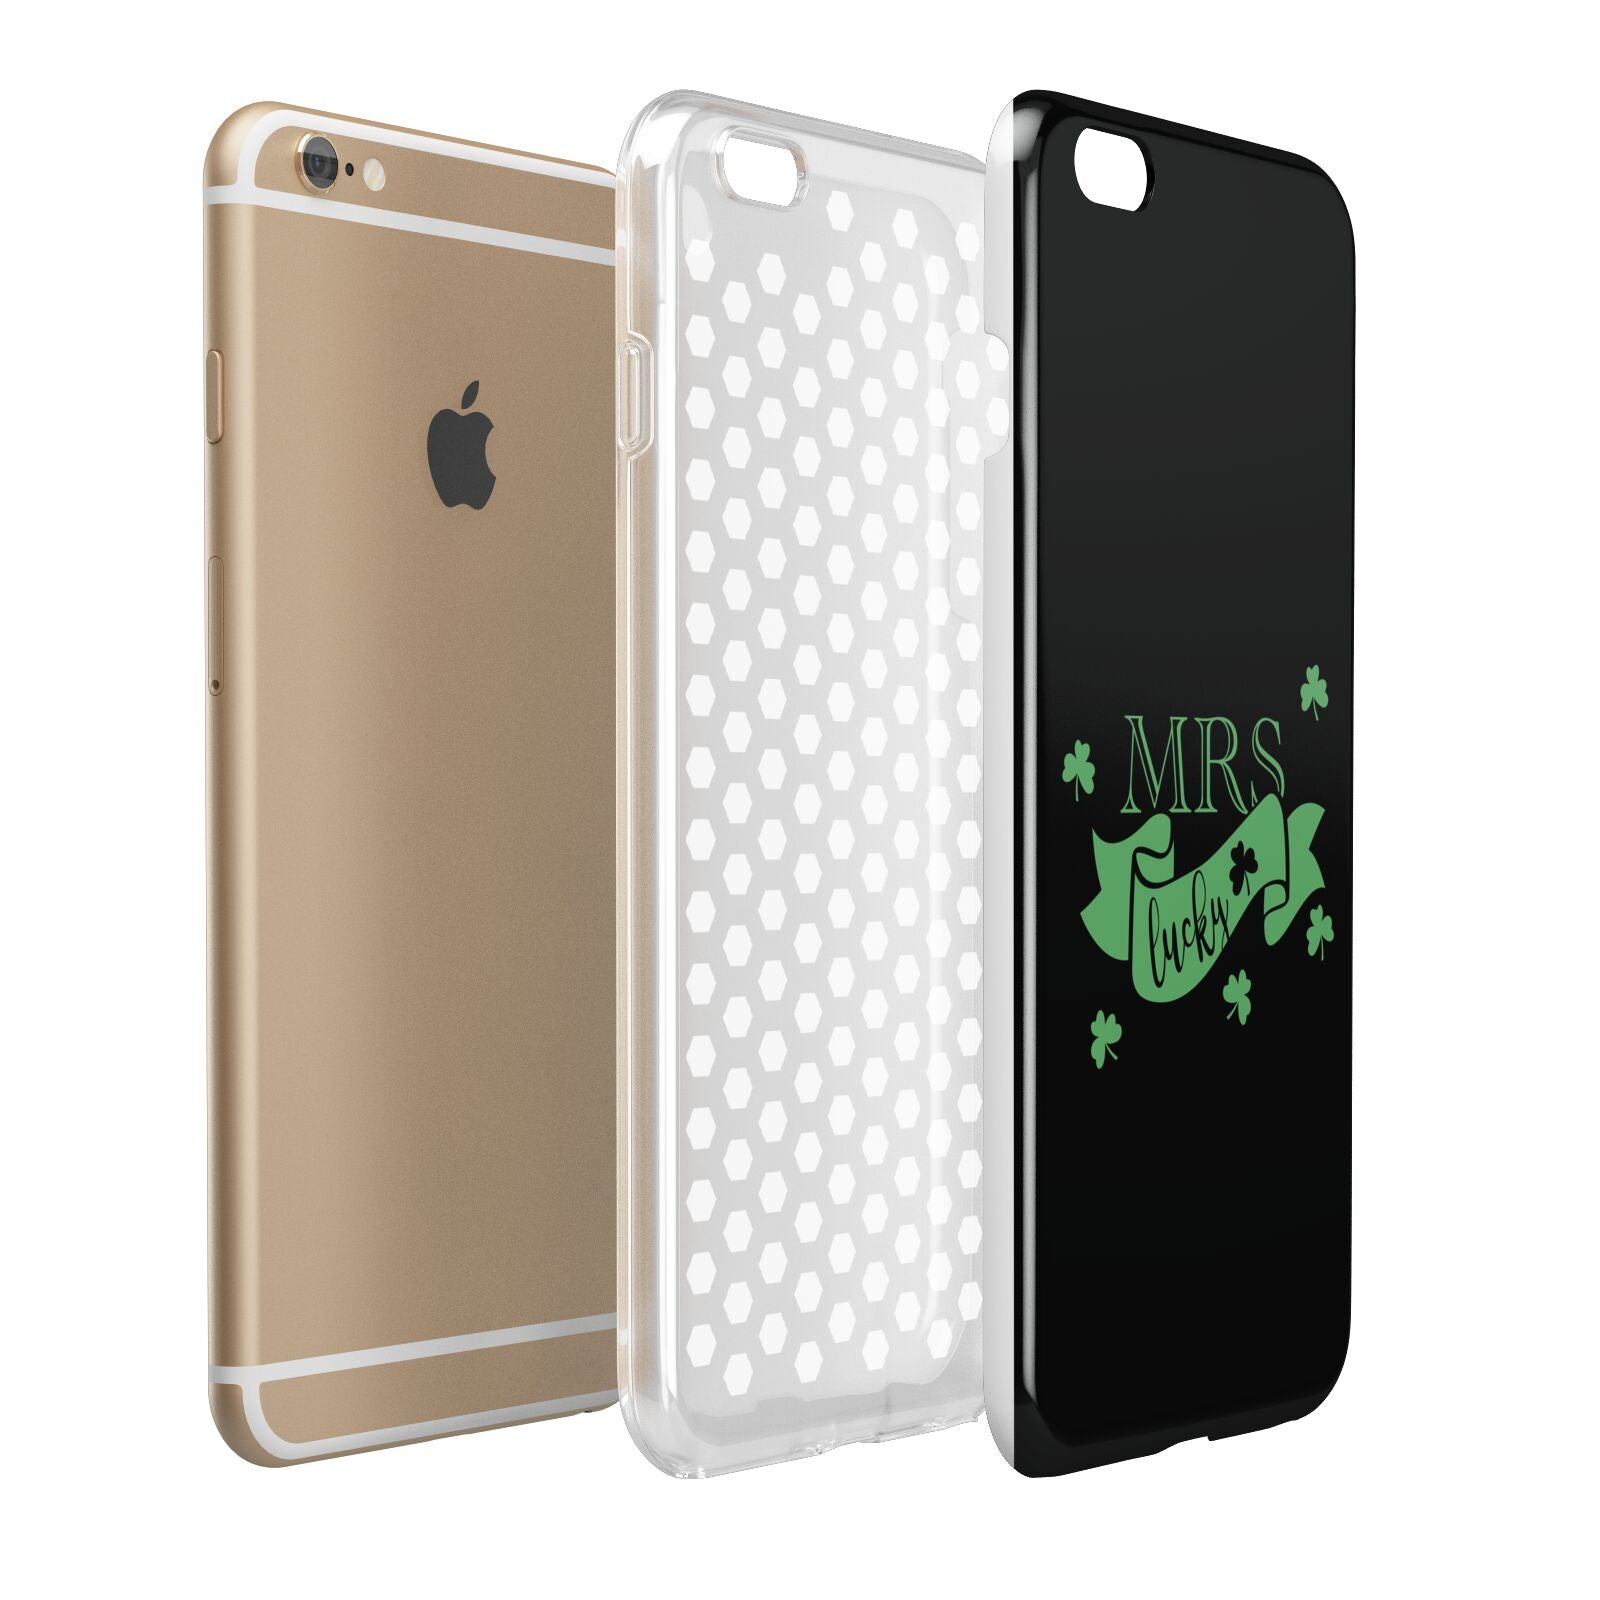 Mrs Lucky Apple iPhone 6 Plus 3D Tough Case Expand Detail Image